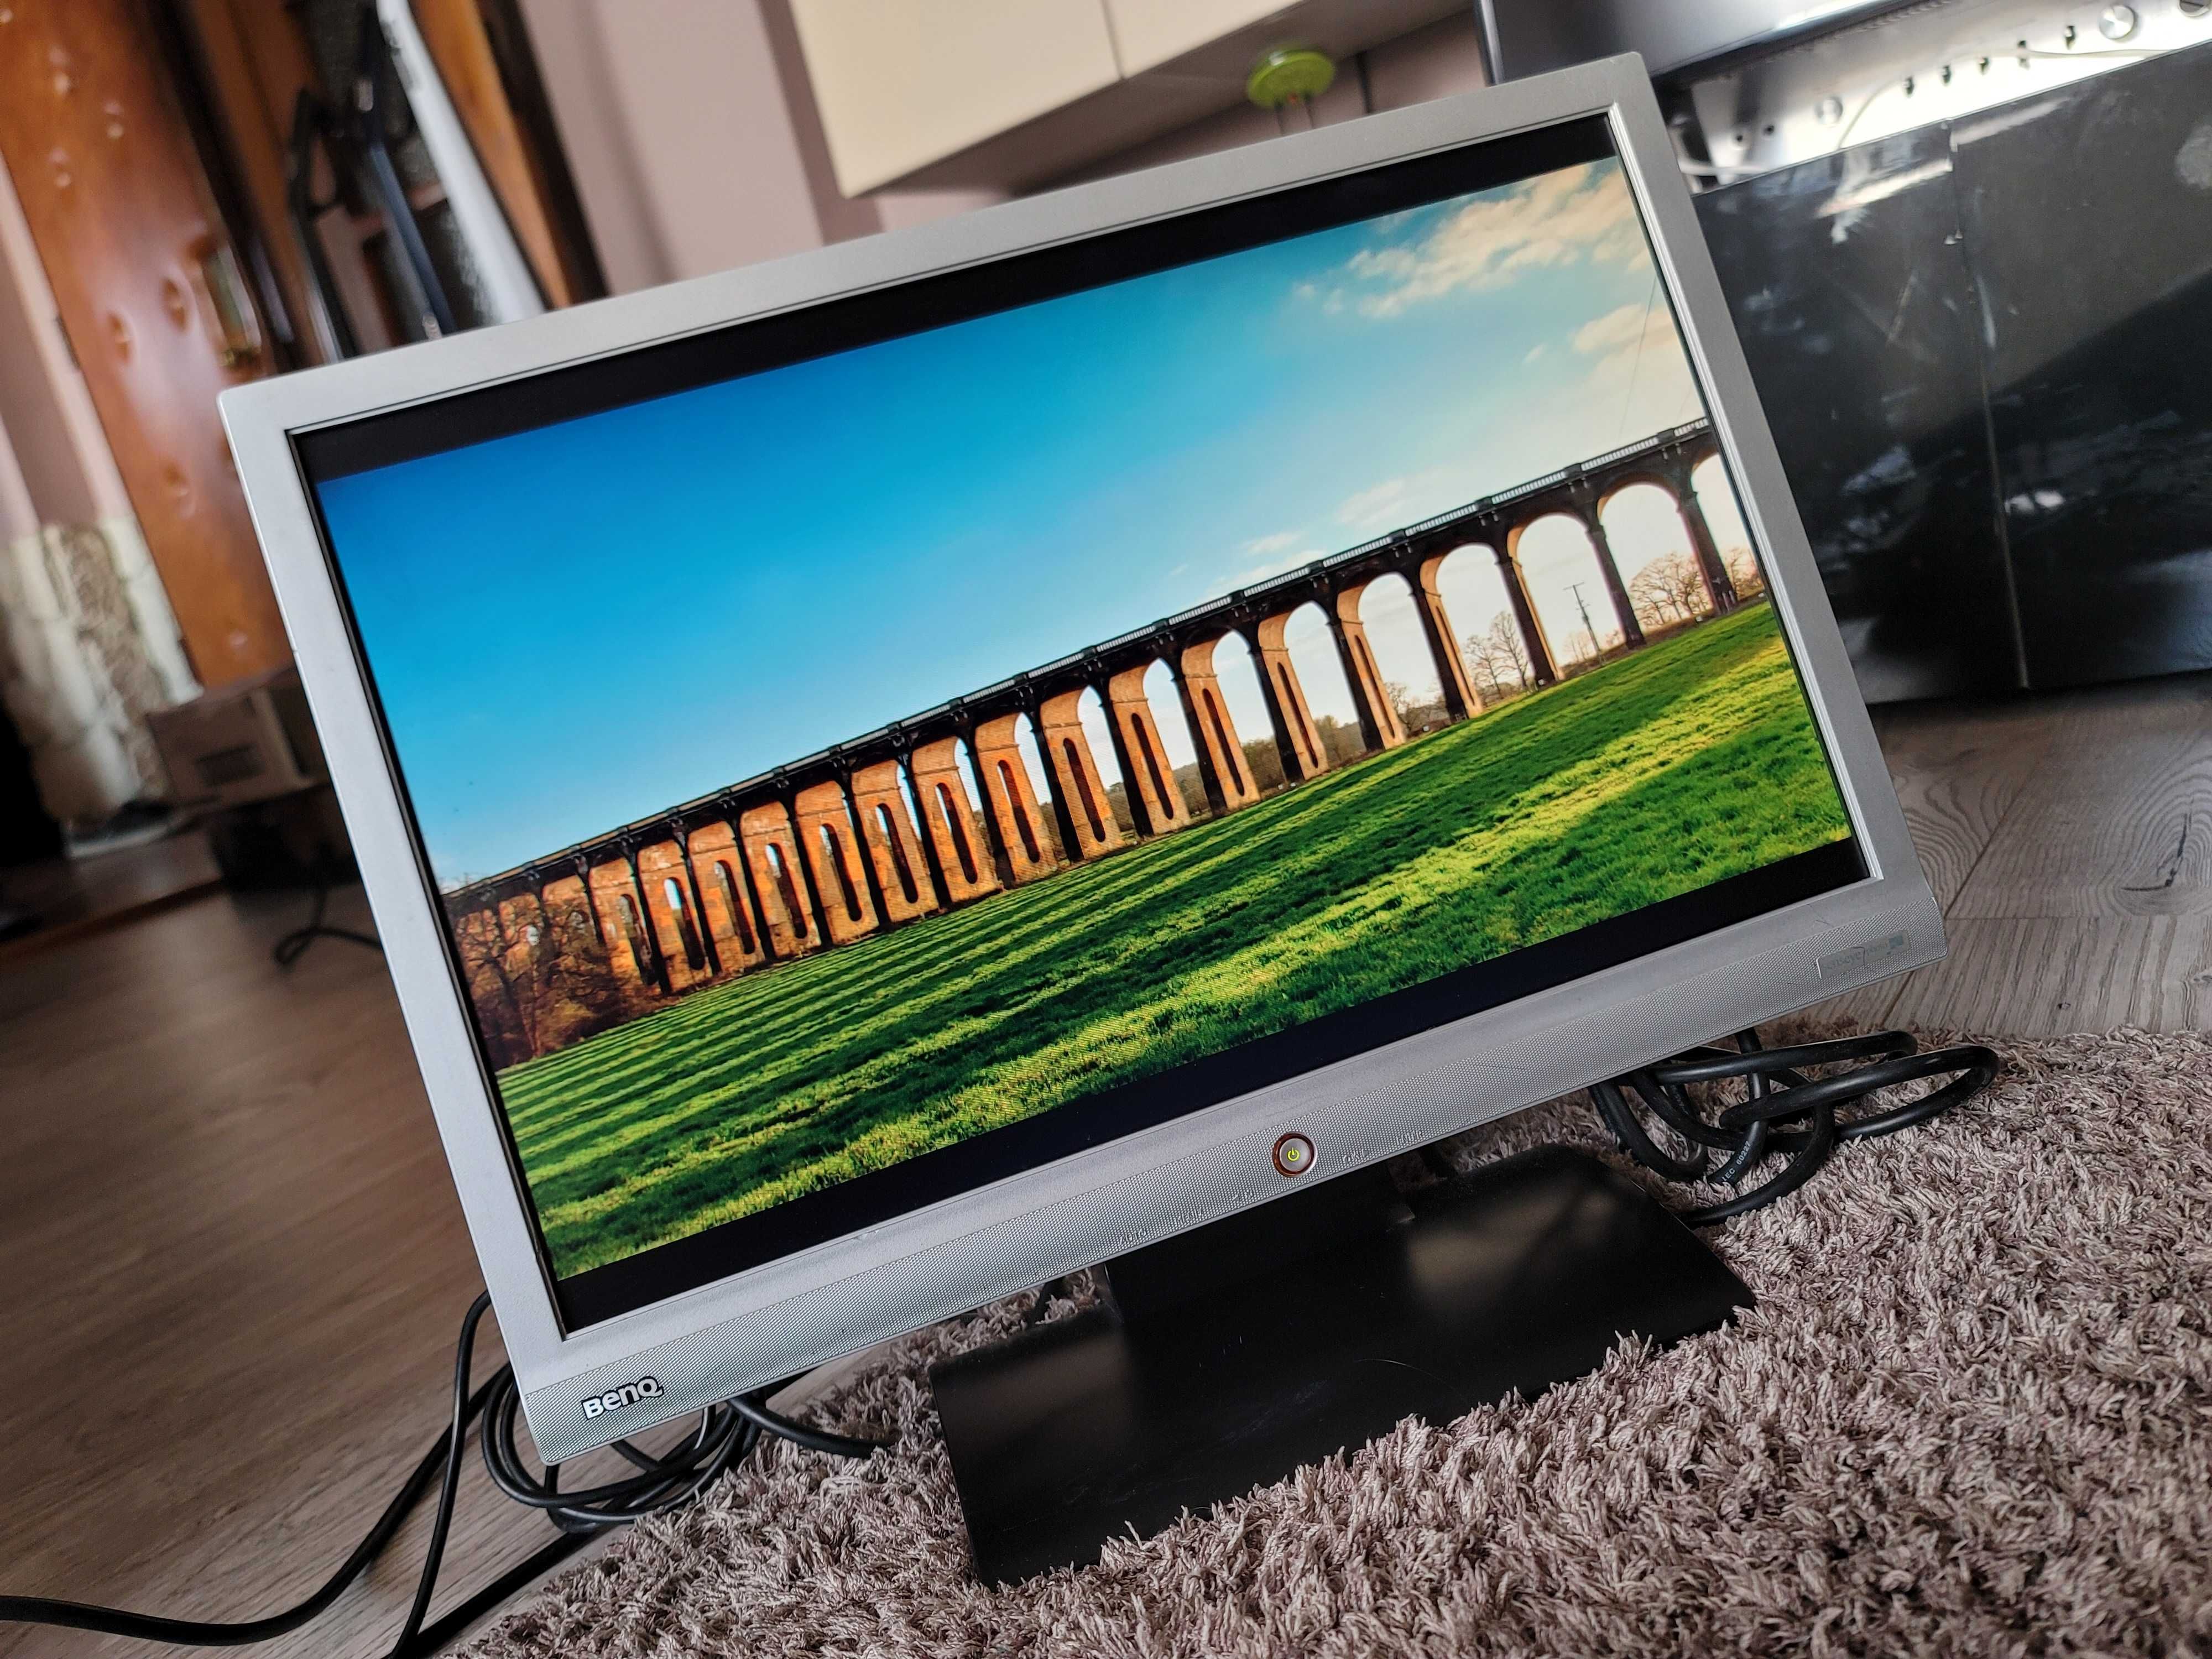 Monitor Benq 19 inch Widescreen